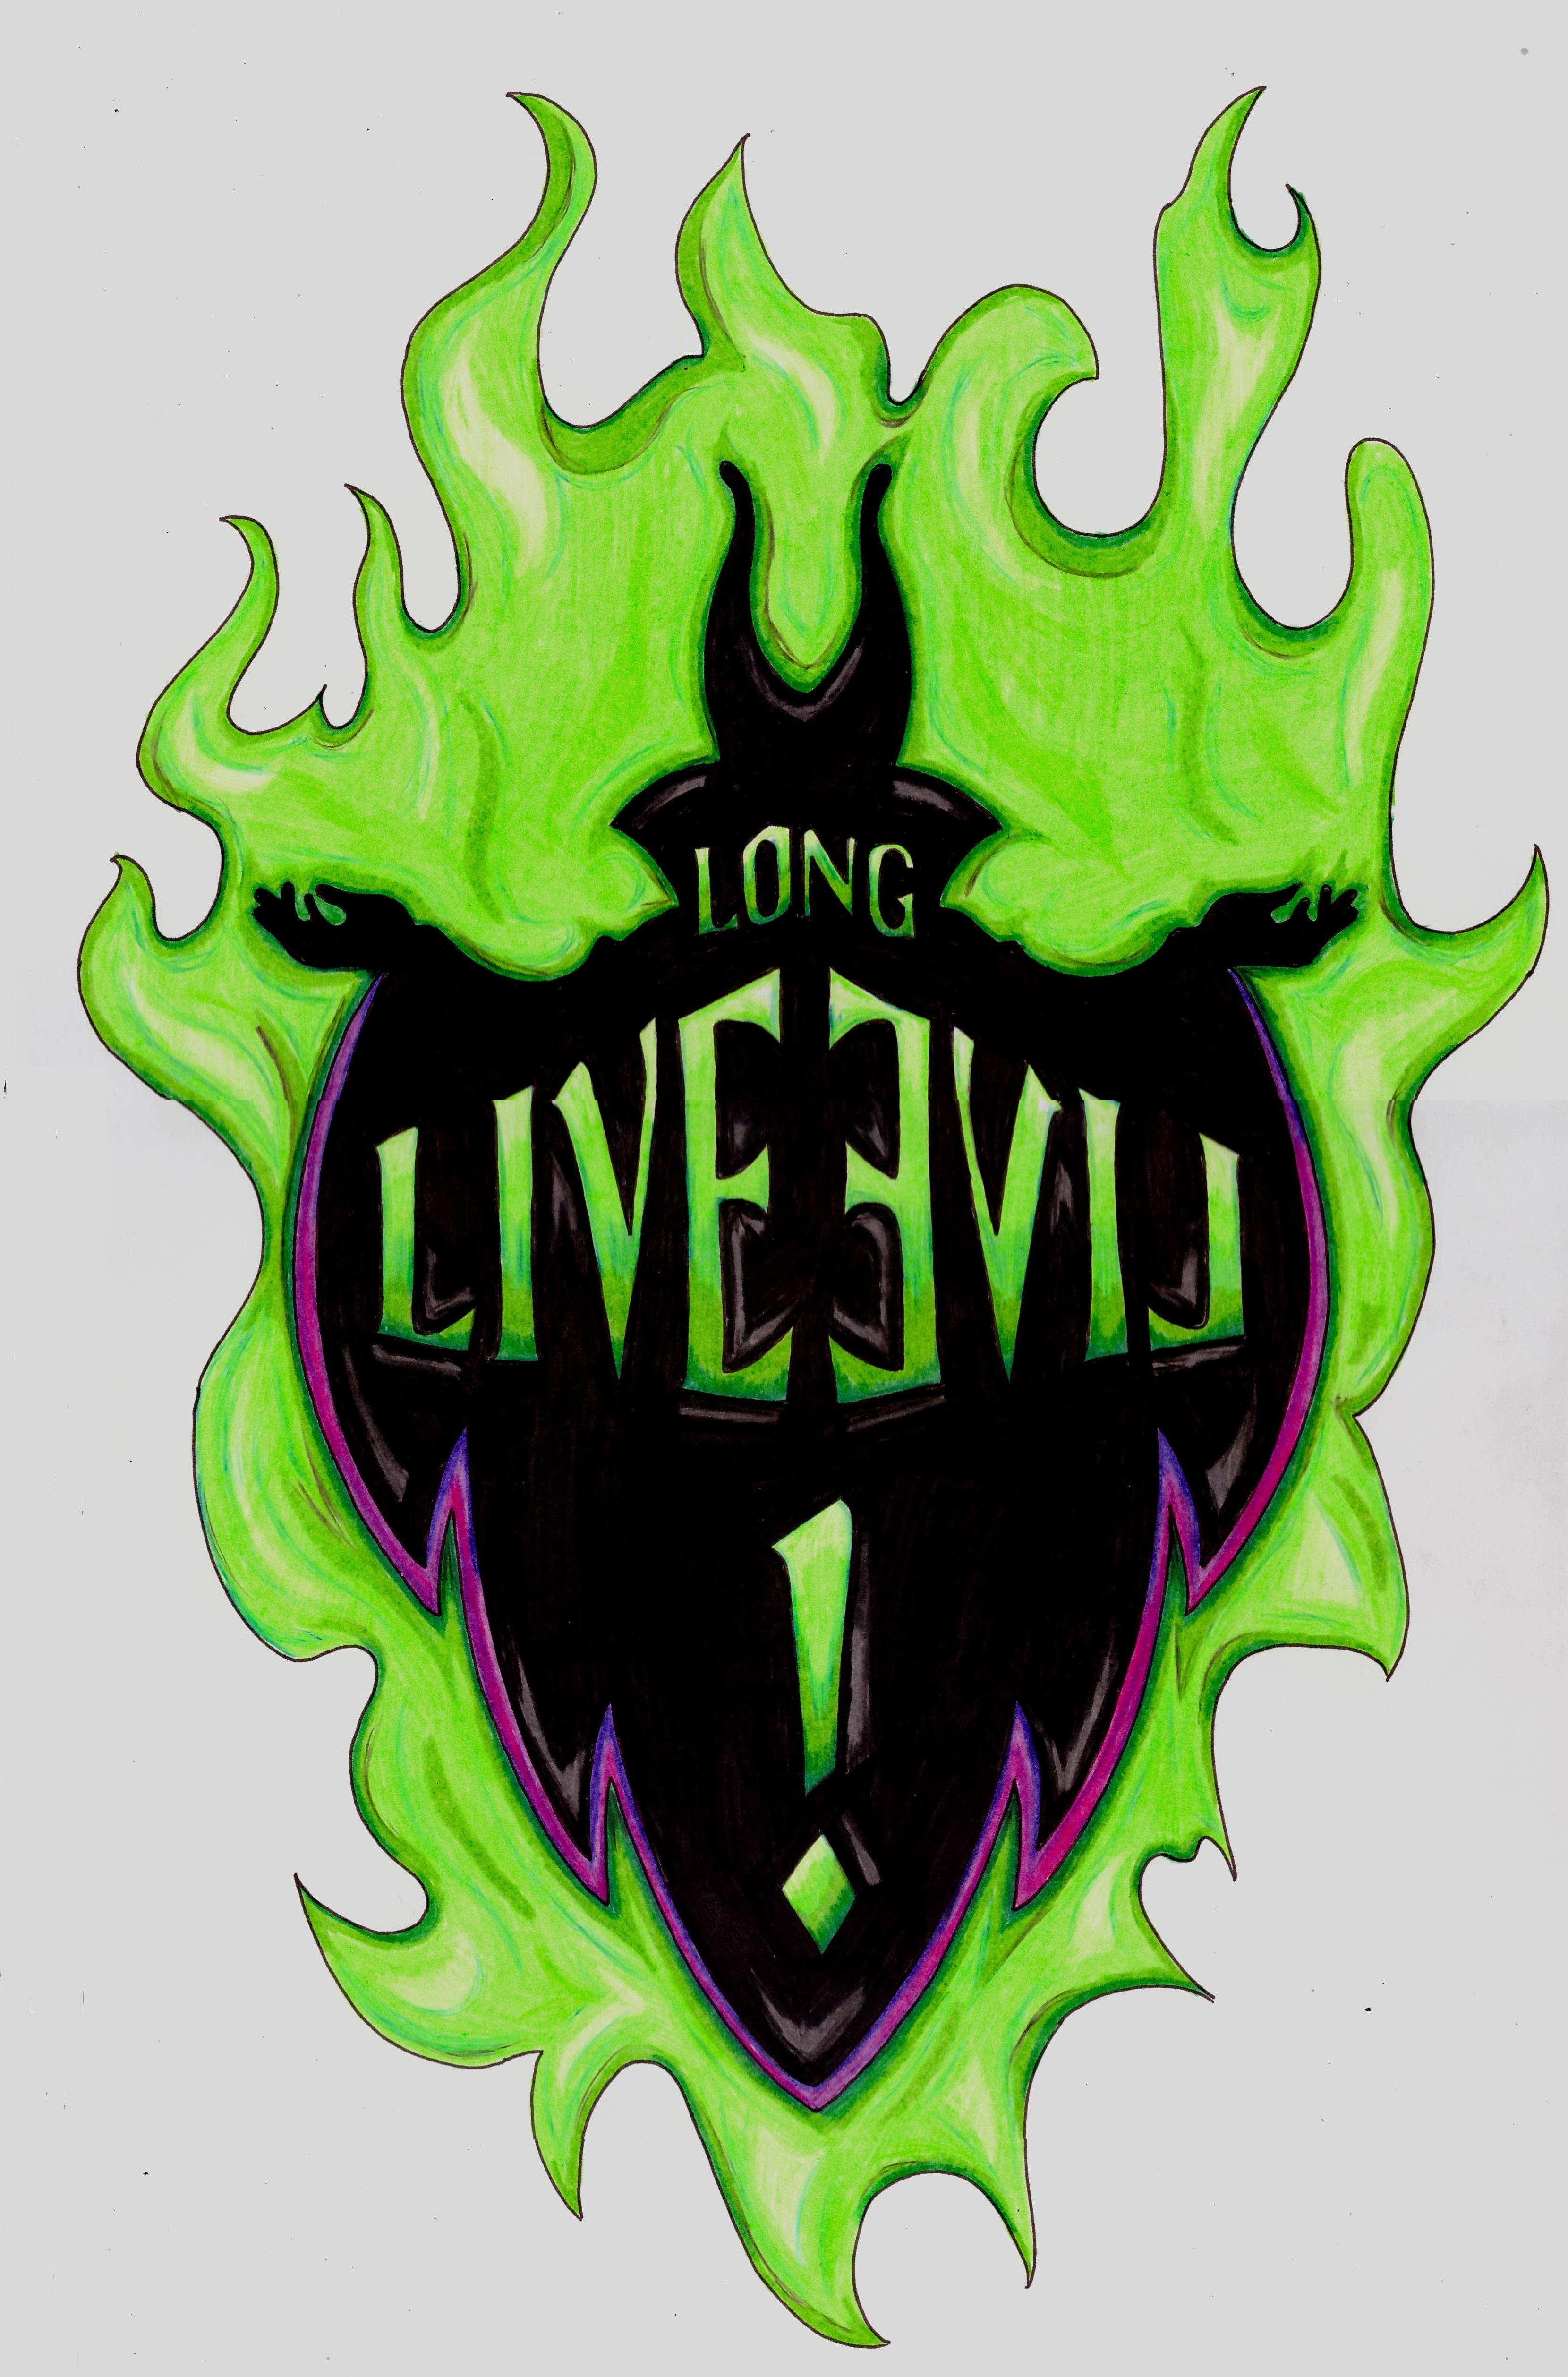 Long live evil Logos